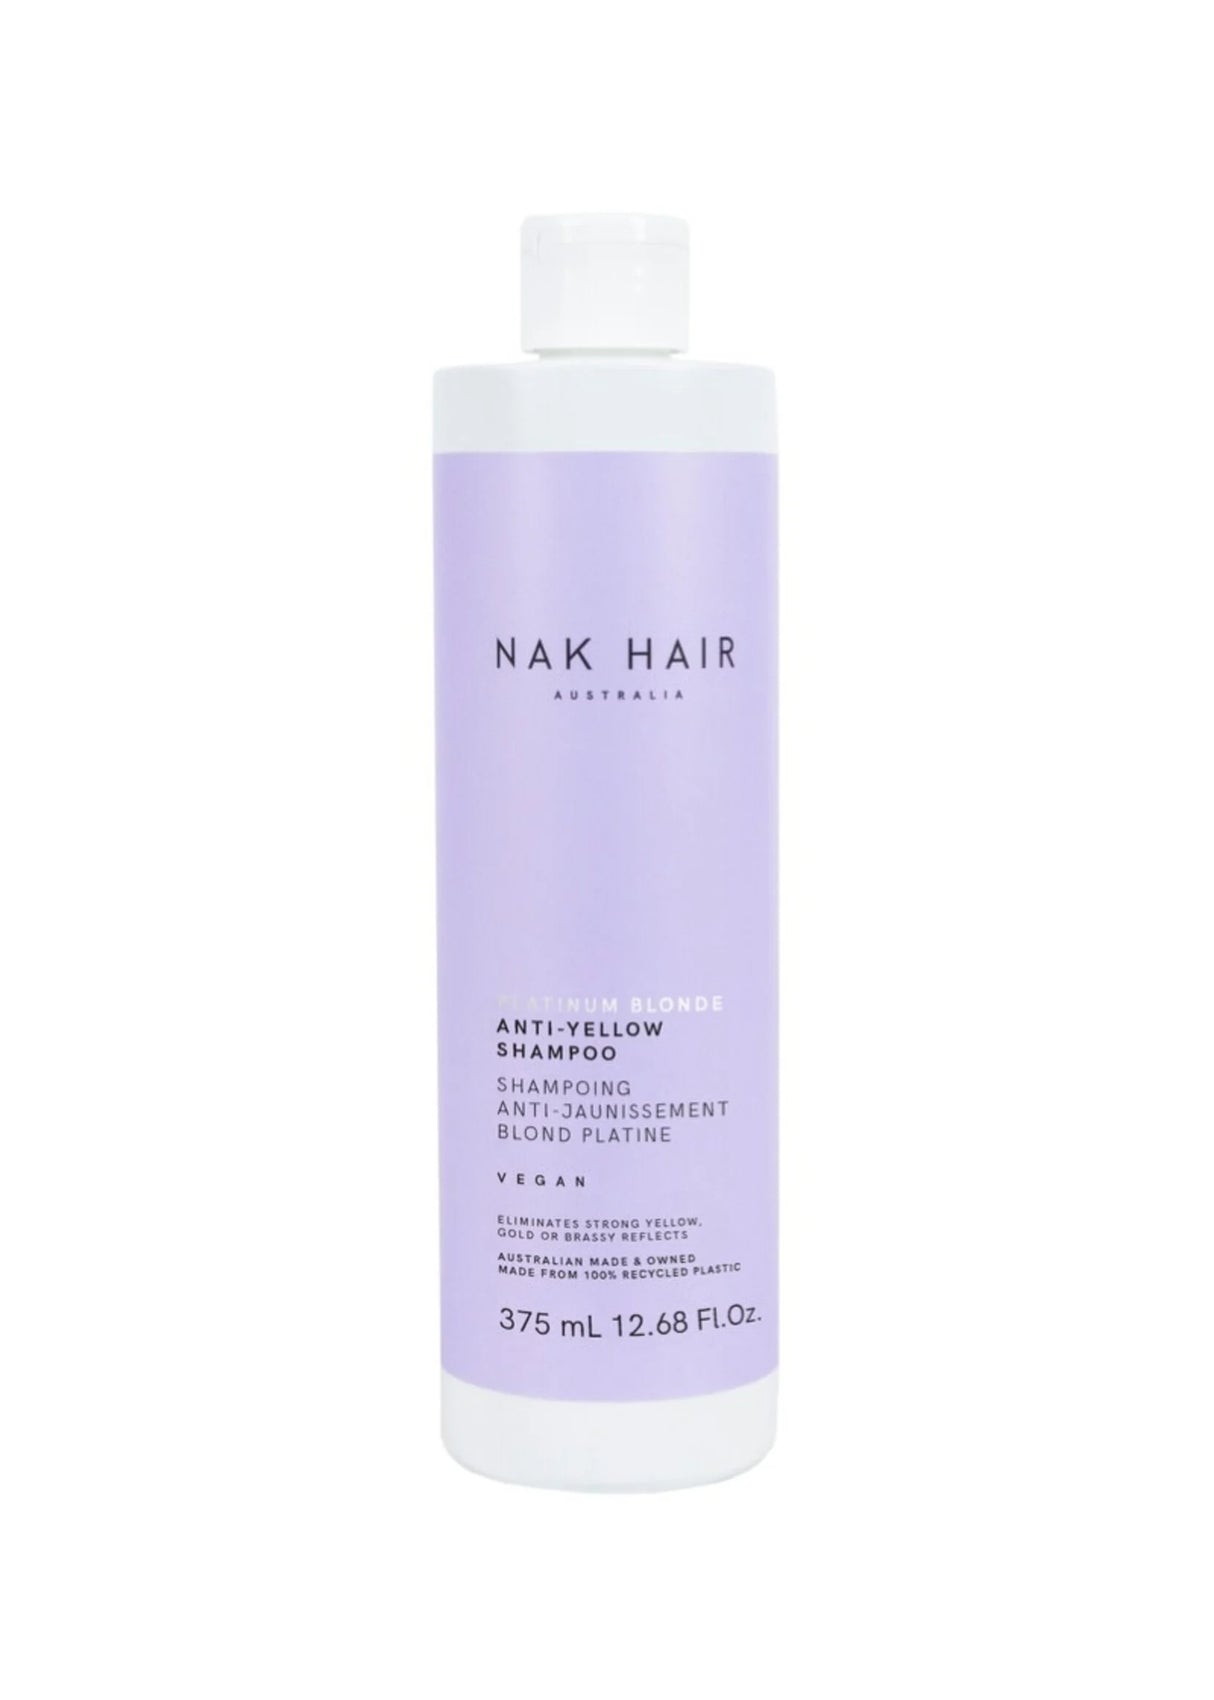 Nak Hair Platinum Blonde Anti-Yellow Shampoo 375ml